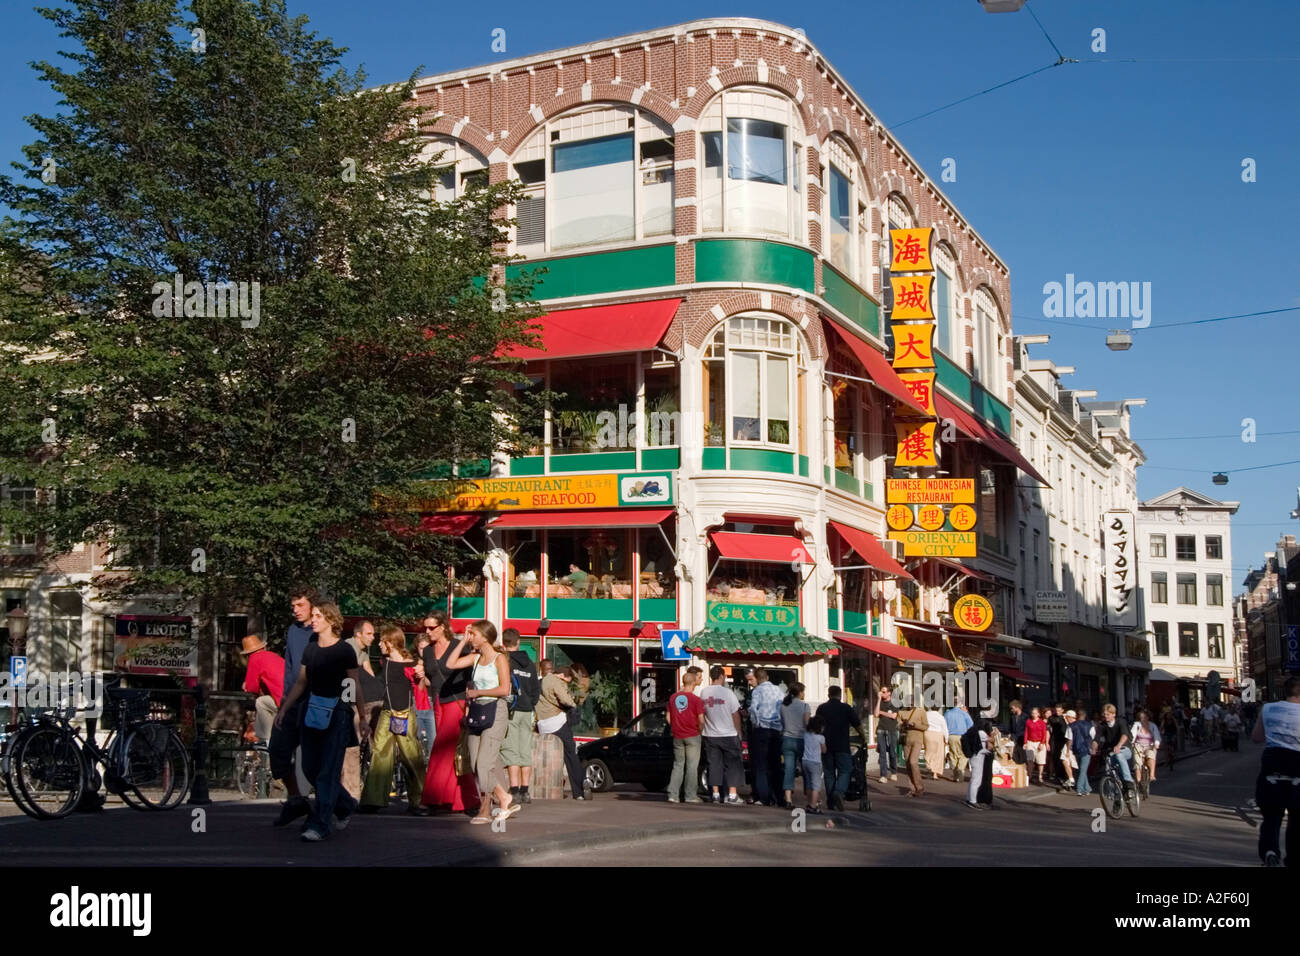 Amsterdam chinese restaurant street scene people Stock Photo